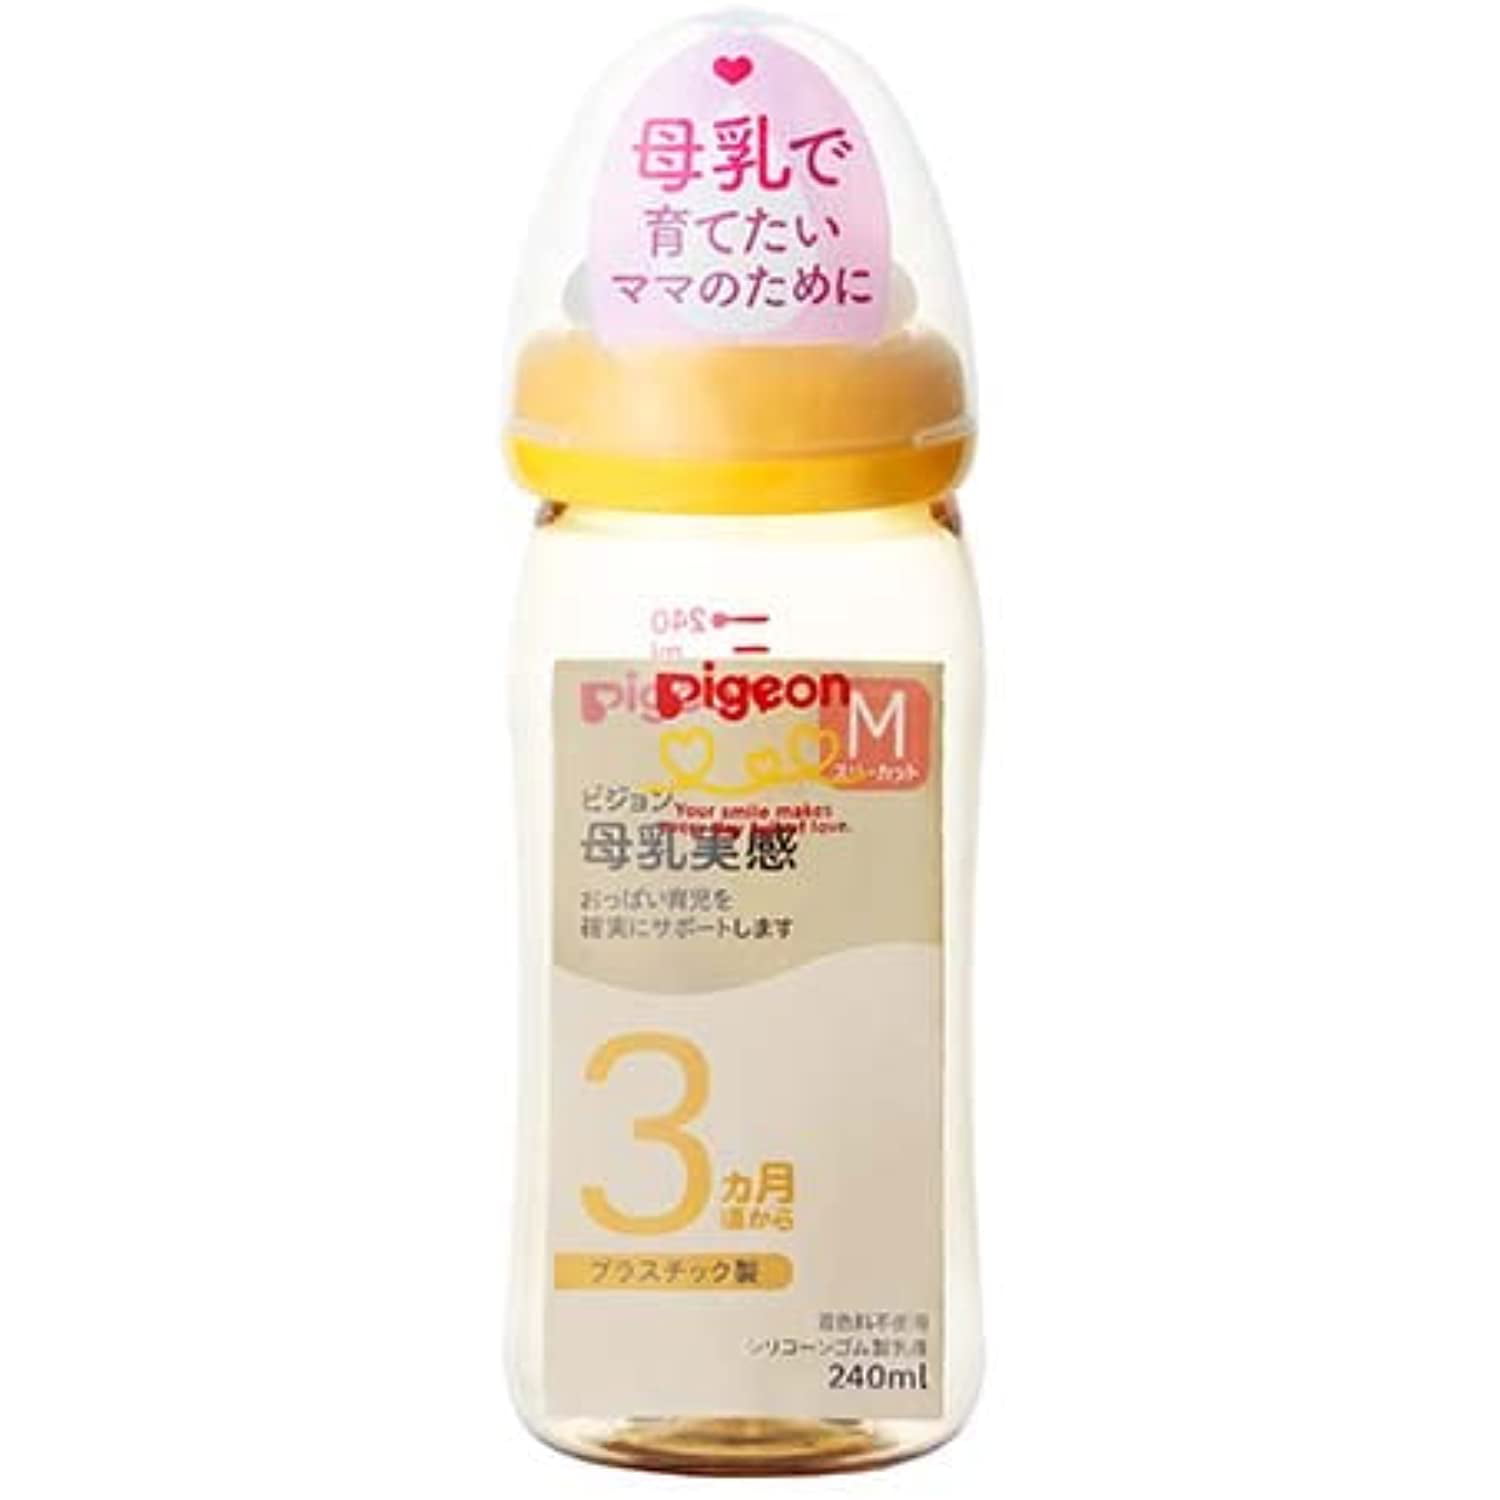 PIGEON Baby Bottle Brush japan import